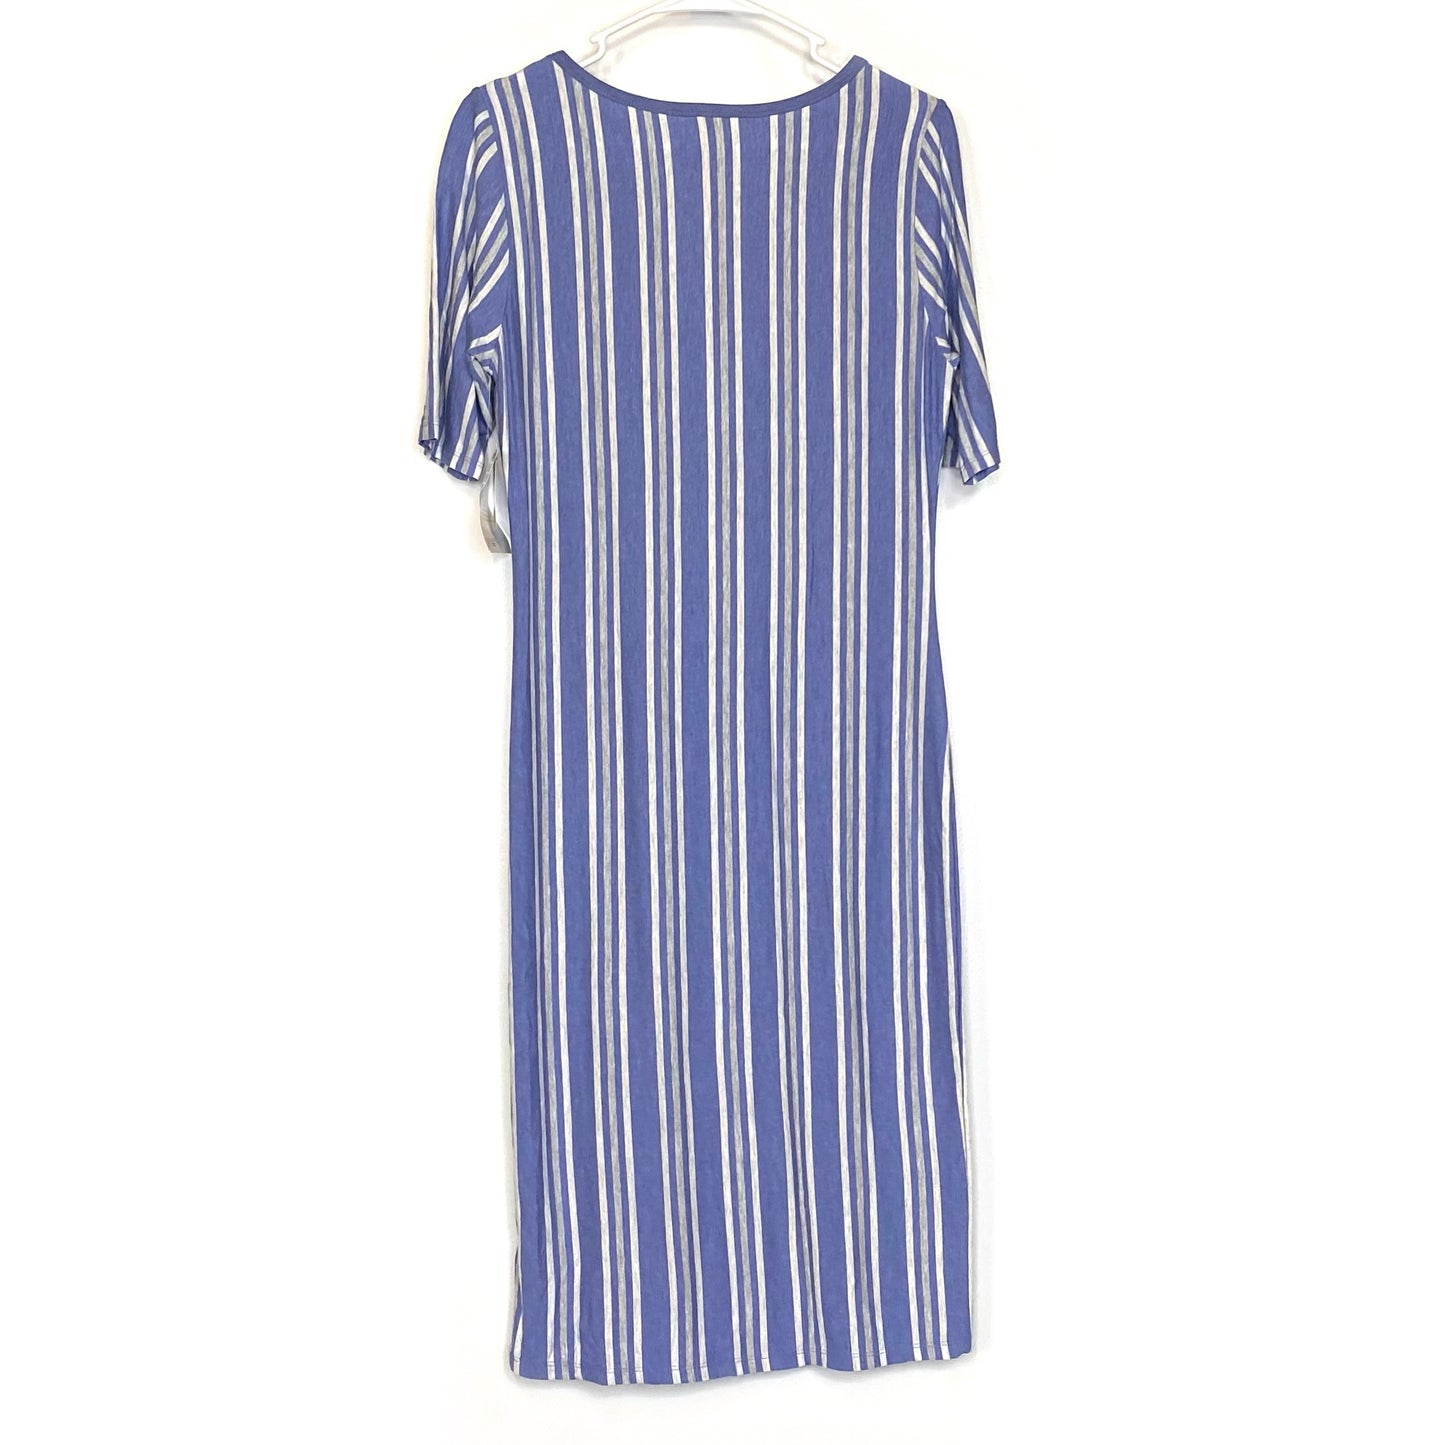 LuLaRoe Womens M Purple/Gray/White Striped Julia Shift Dress Scoop Neck ½ Sleeves NWT